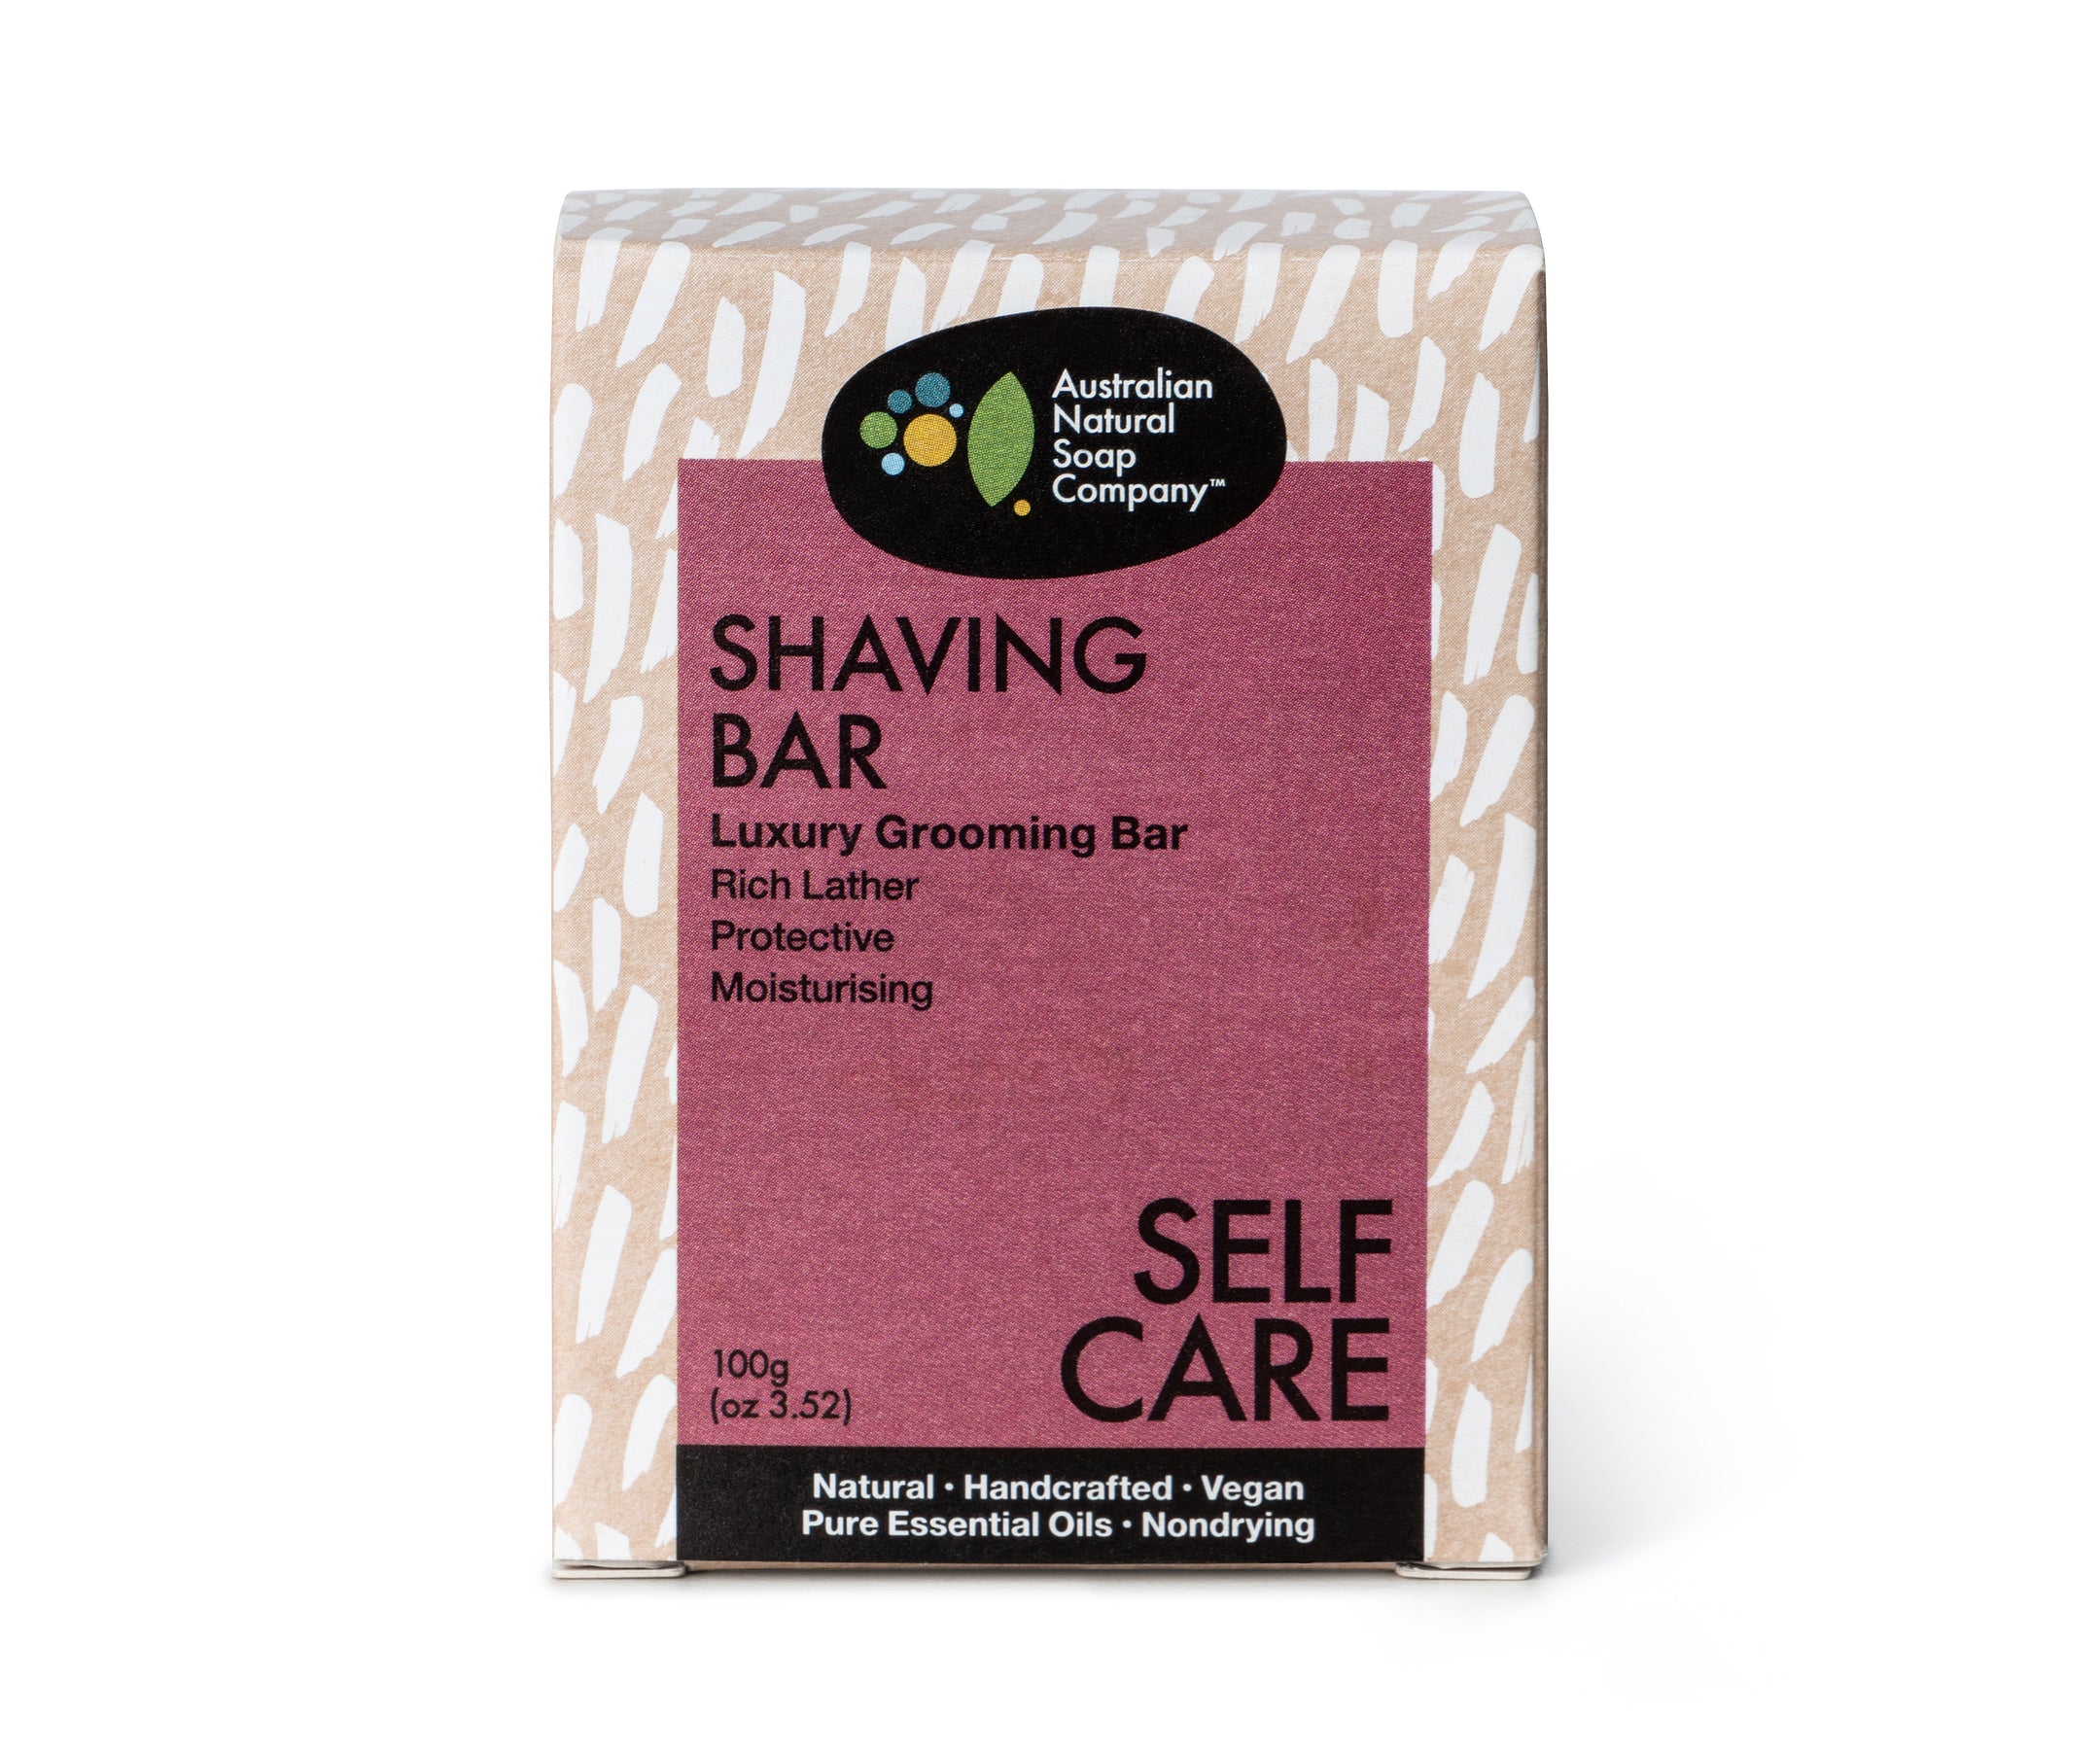 Australian Natural Soap Company shaving bar front of box